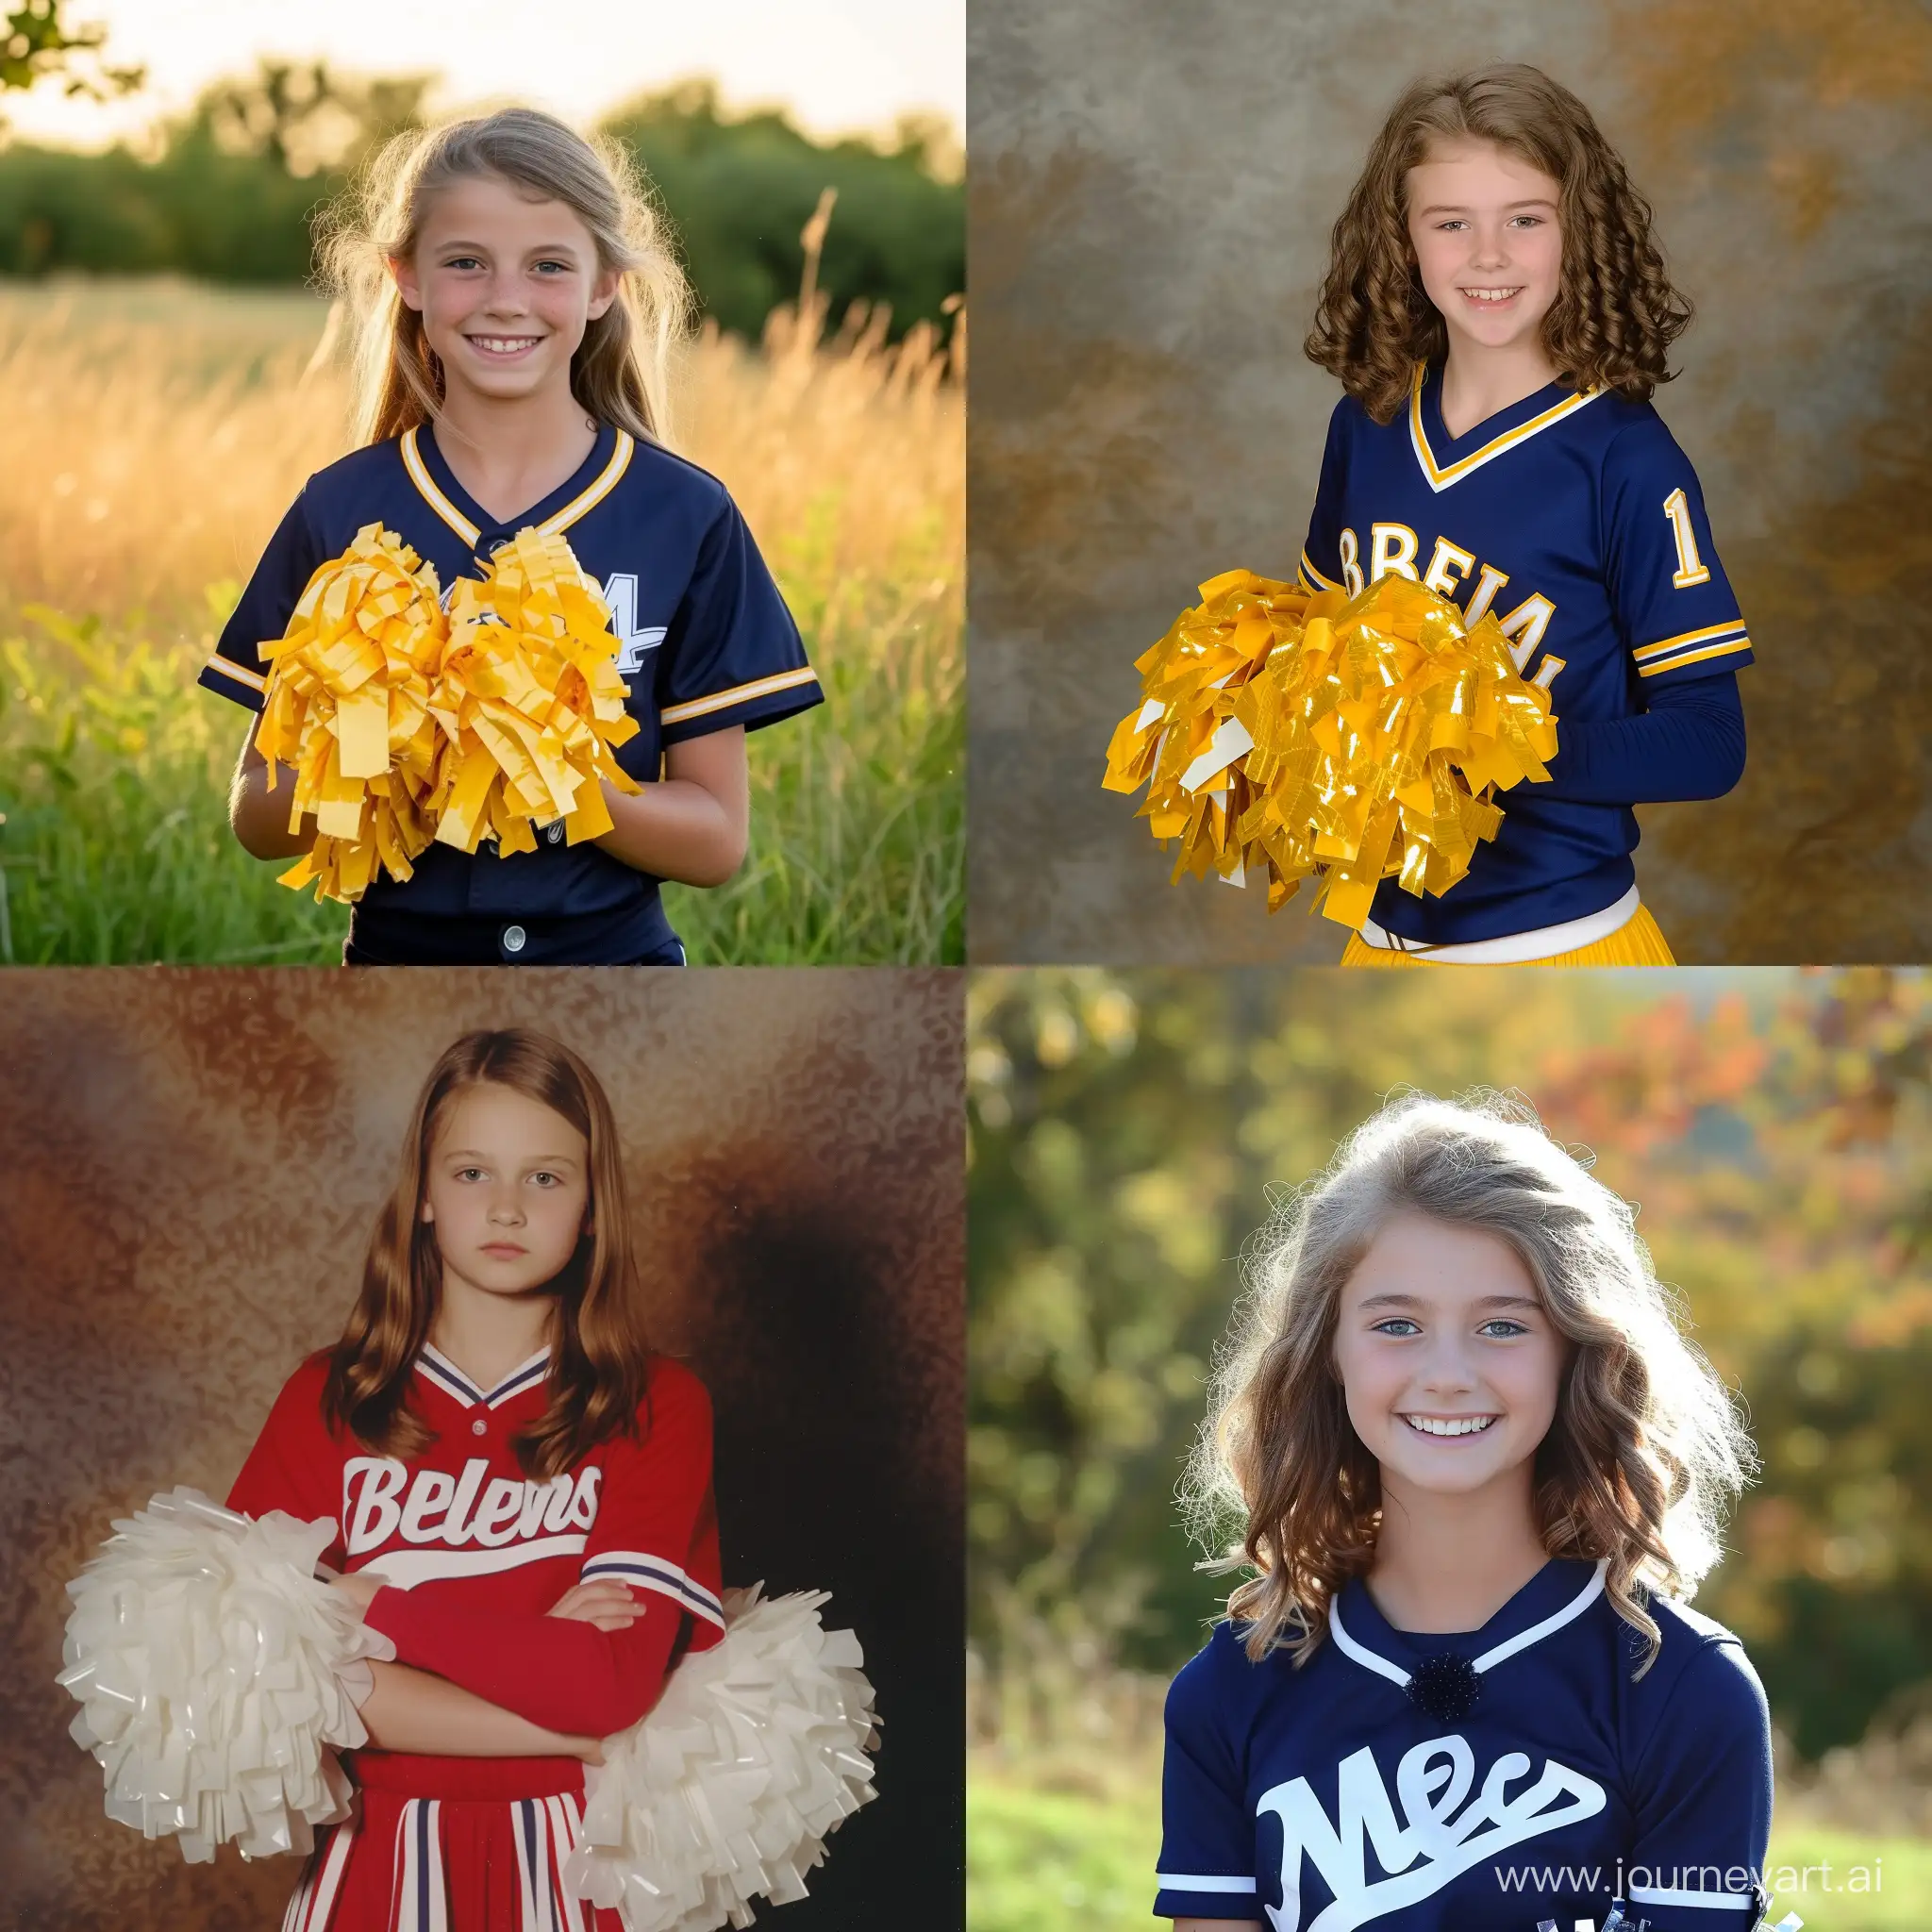 Milwaukee Brewers 13-14 year old cheerleader